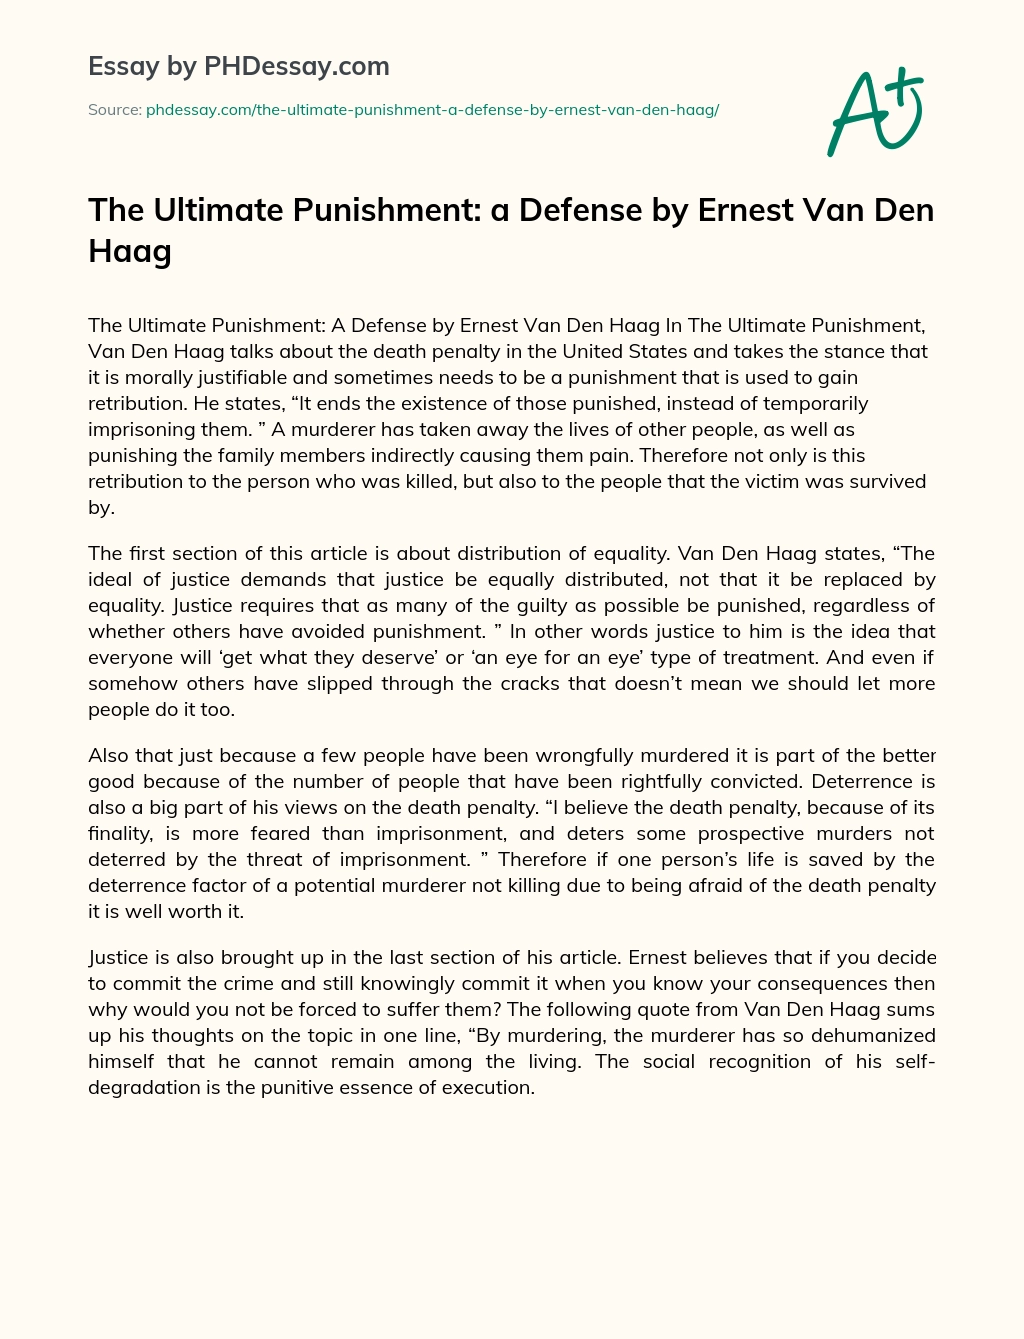 The Ultimate Punishment: a Defense by Ernest Van Den Haag essay